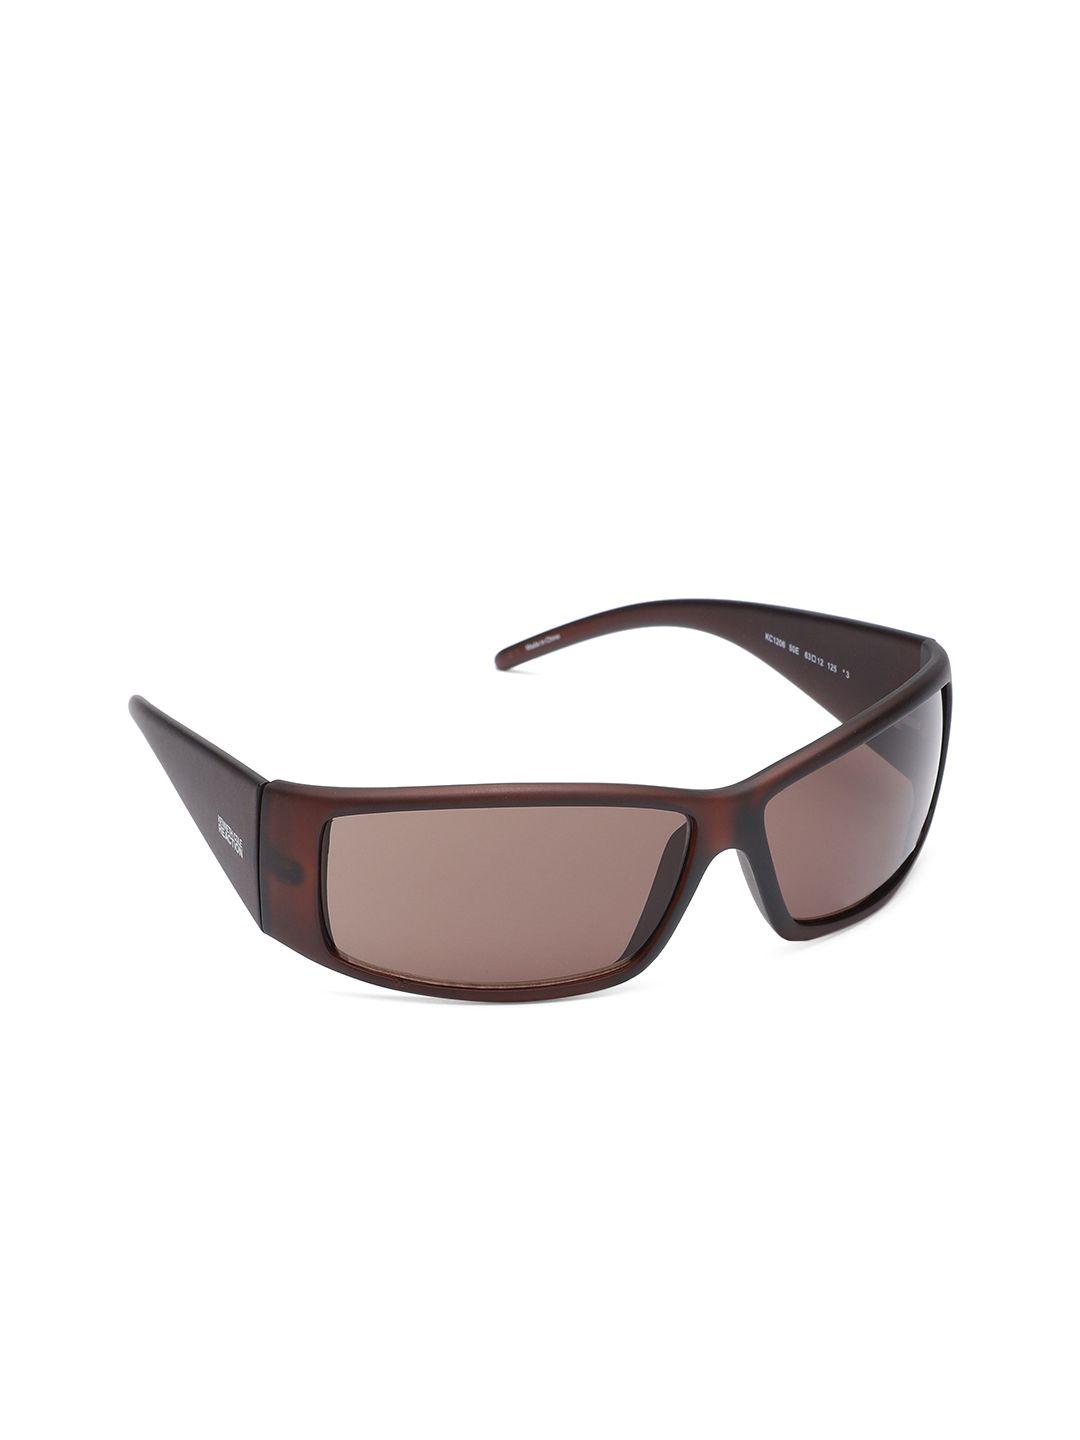 kenneth-cole-unisex-brown-rectangle-sunglasses-kc1206-63-50e